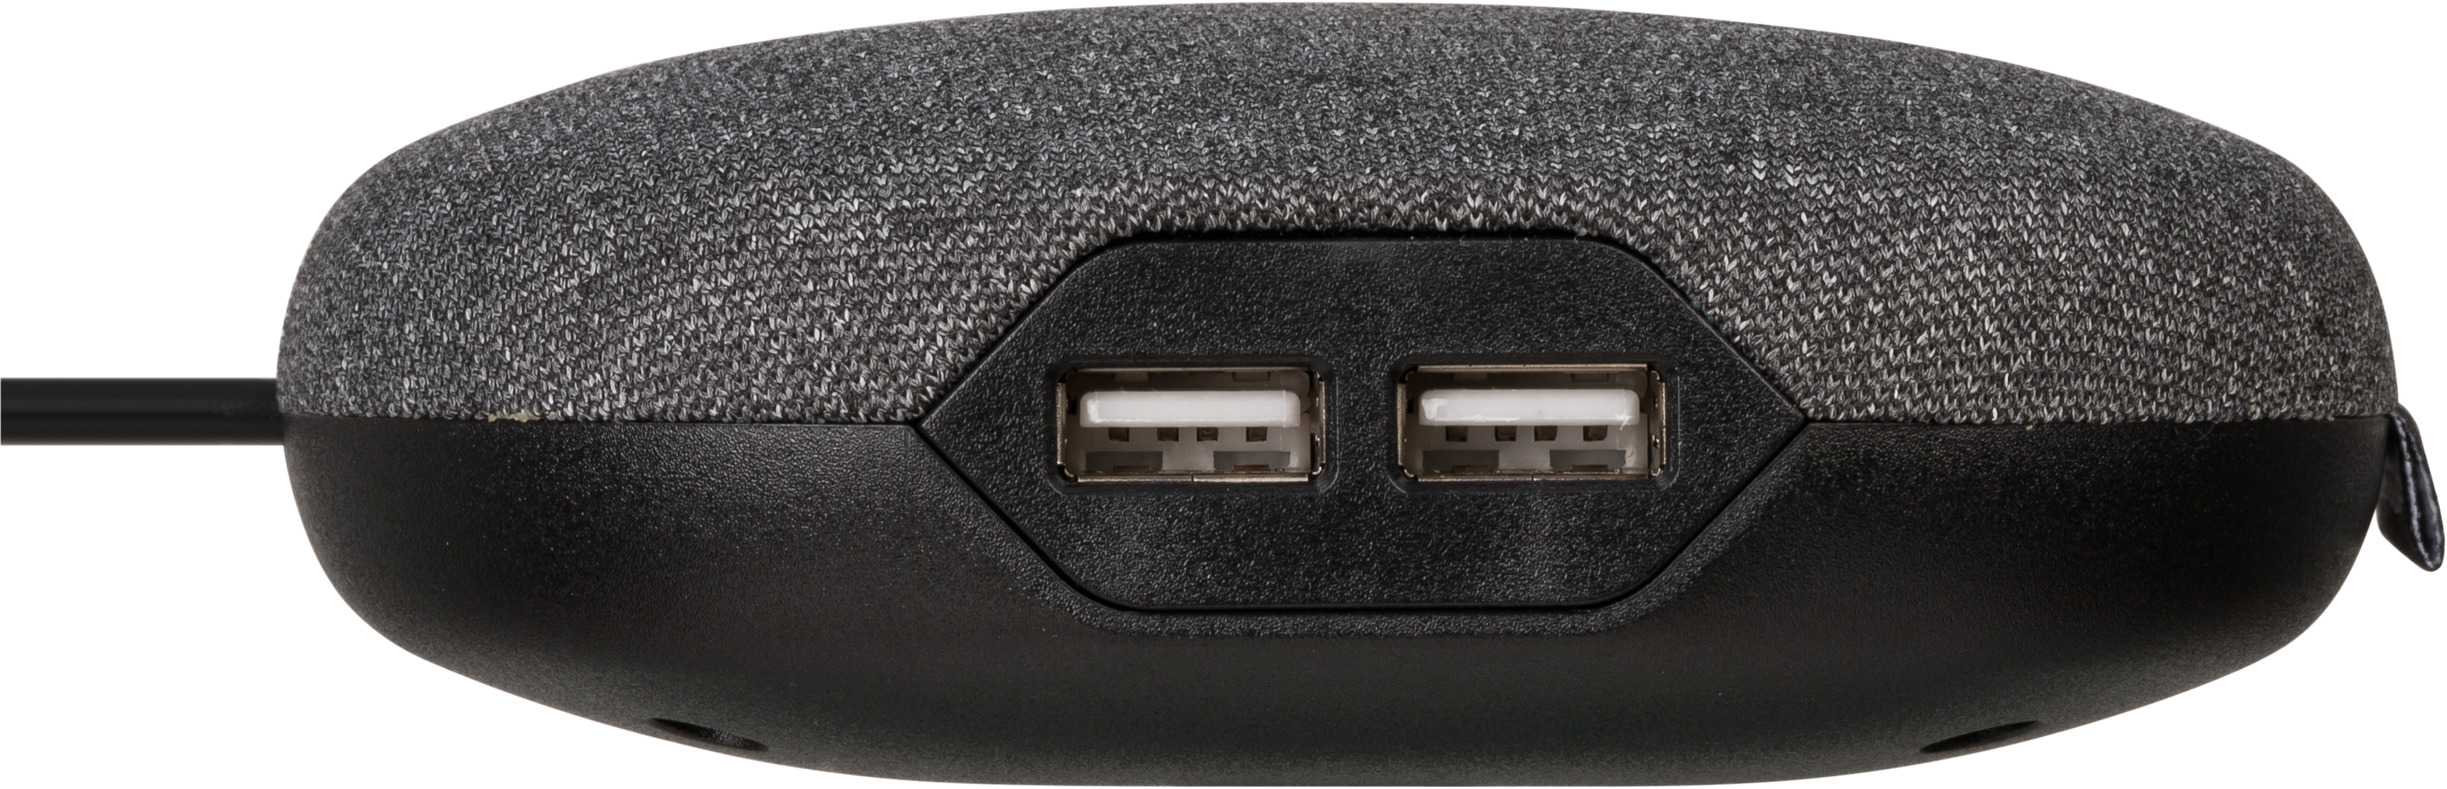 brennenstuhl®estilo USB multicargador con cable textil de 1,5 m 4x USB + 1x USB  C